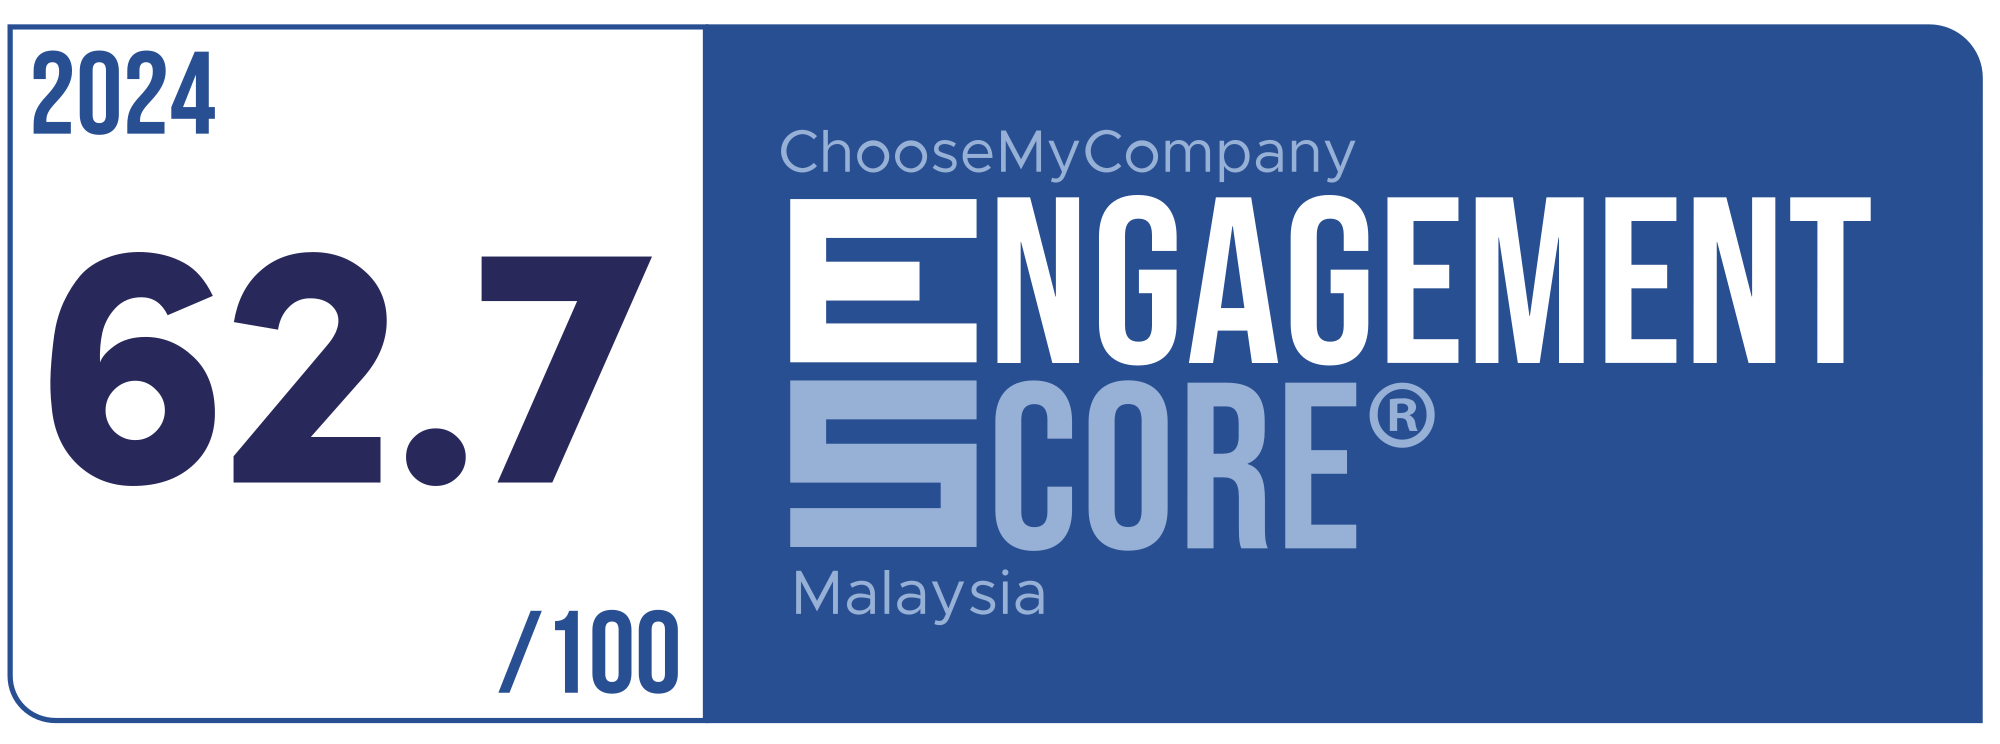 Label Engagement Score 2024 Malaysia